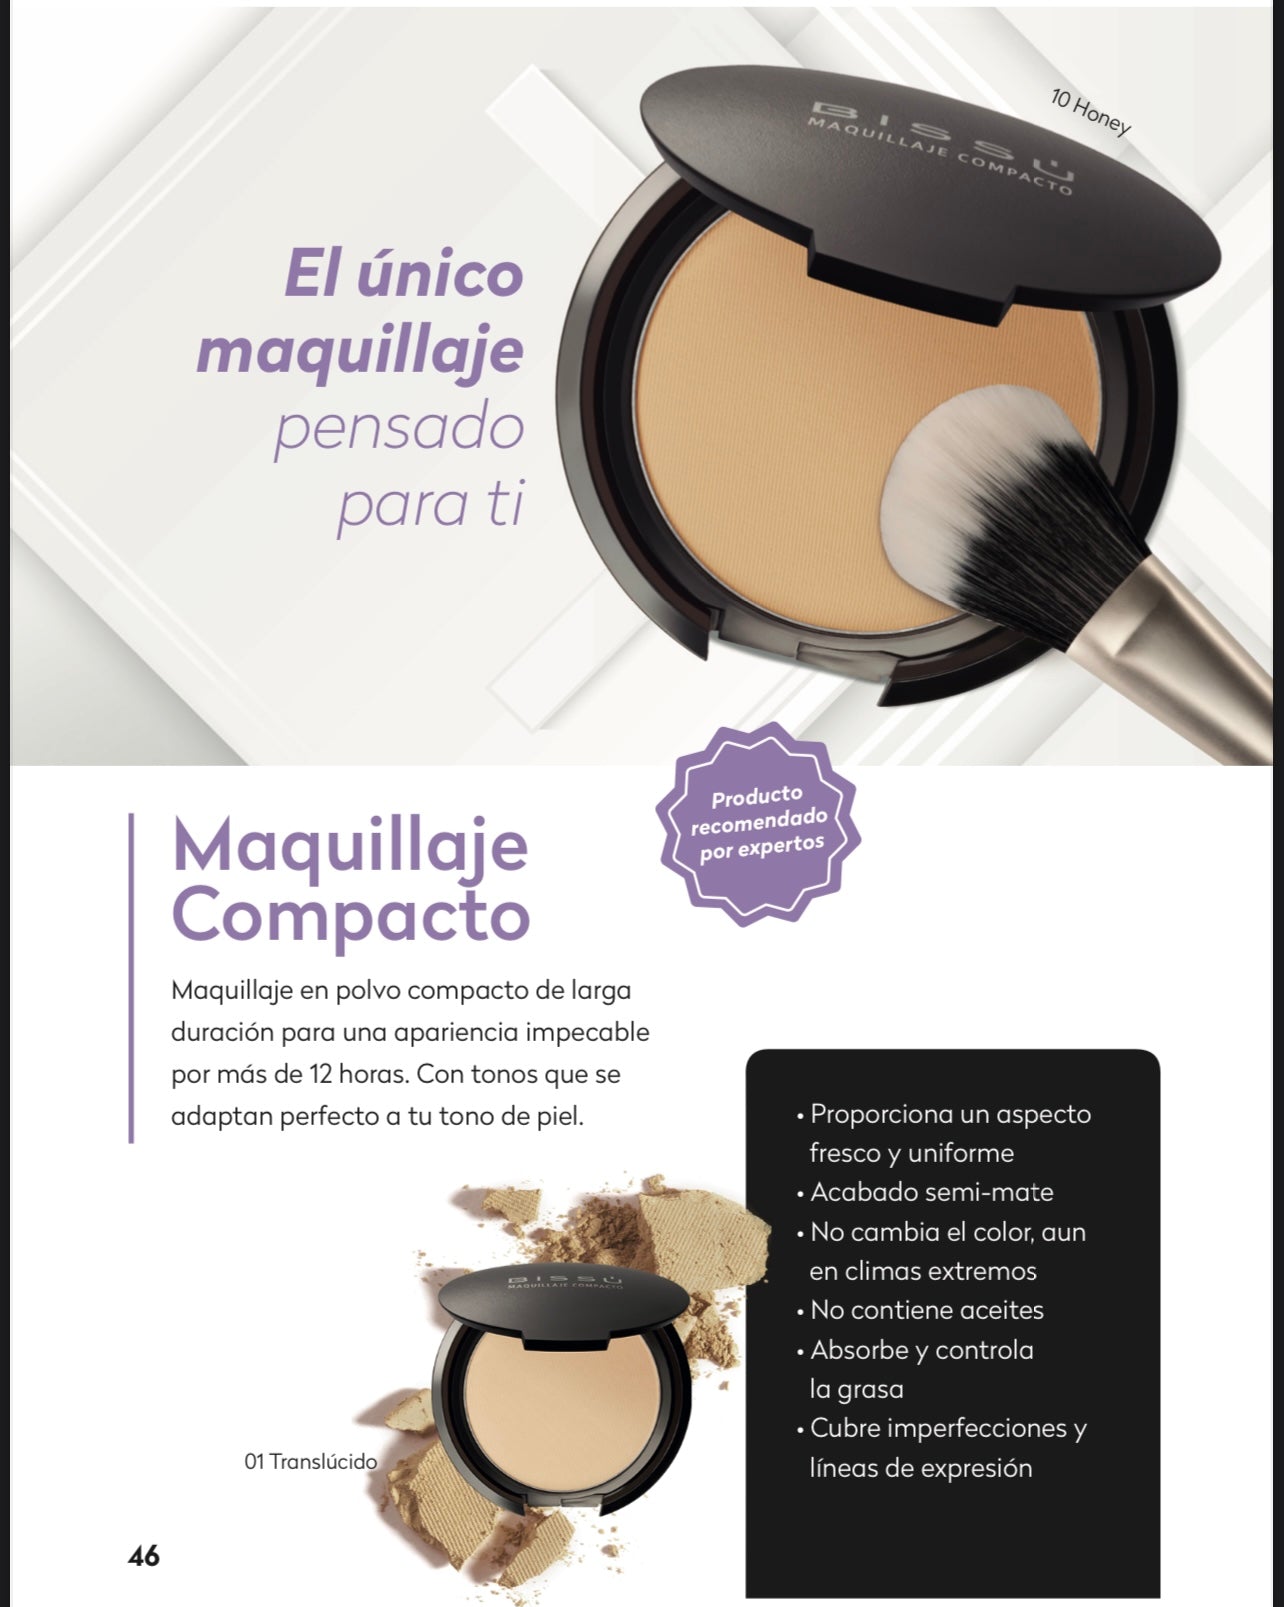 Bissu Compact powder makeup